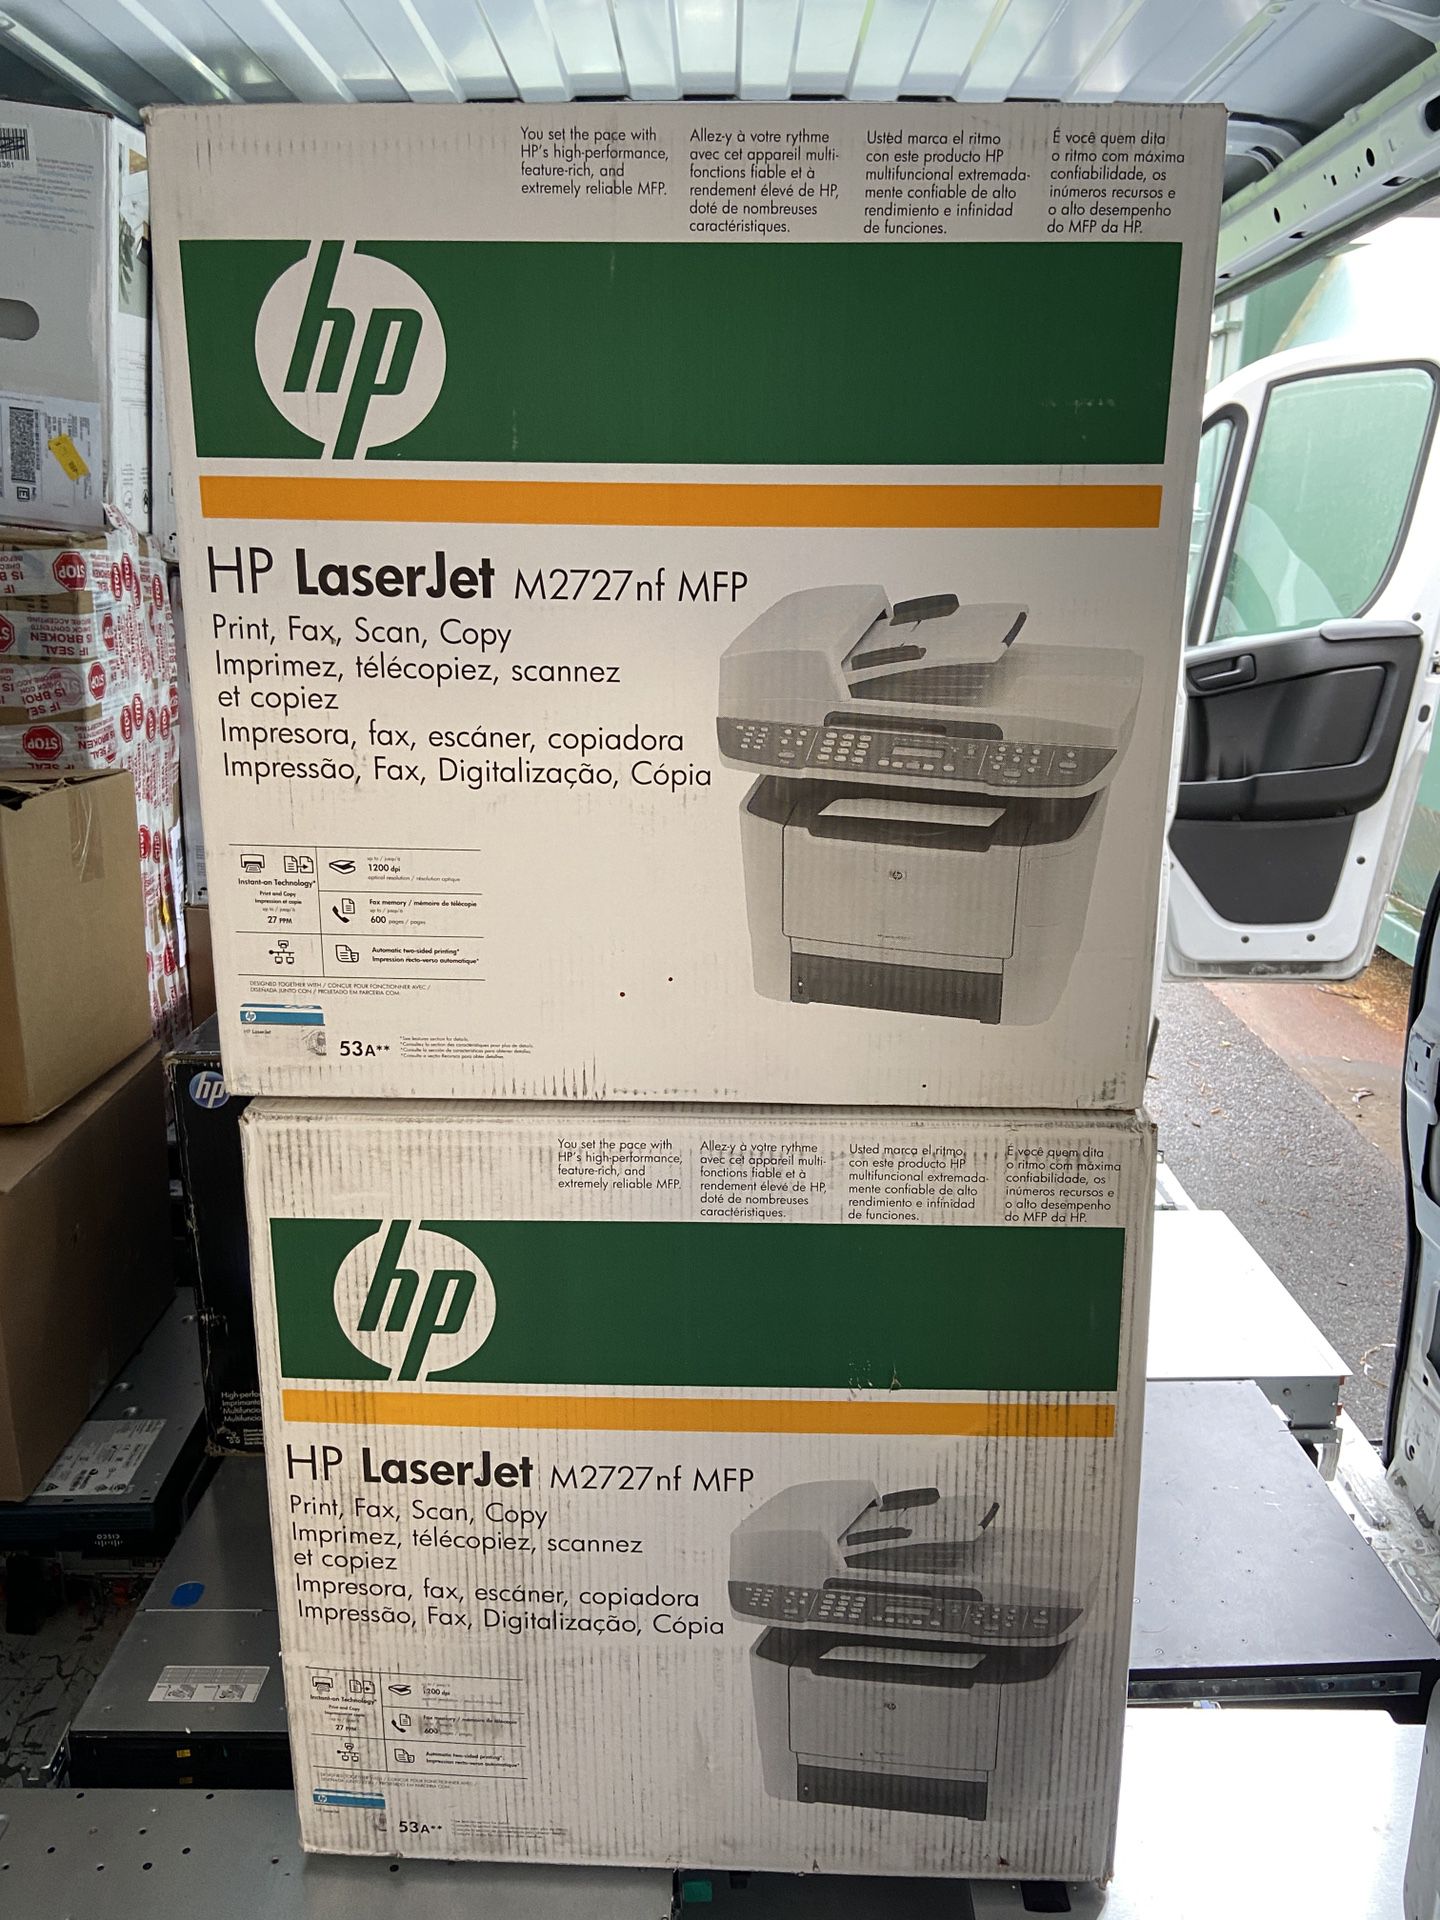 New HP Laserjet M2727nf MFP